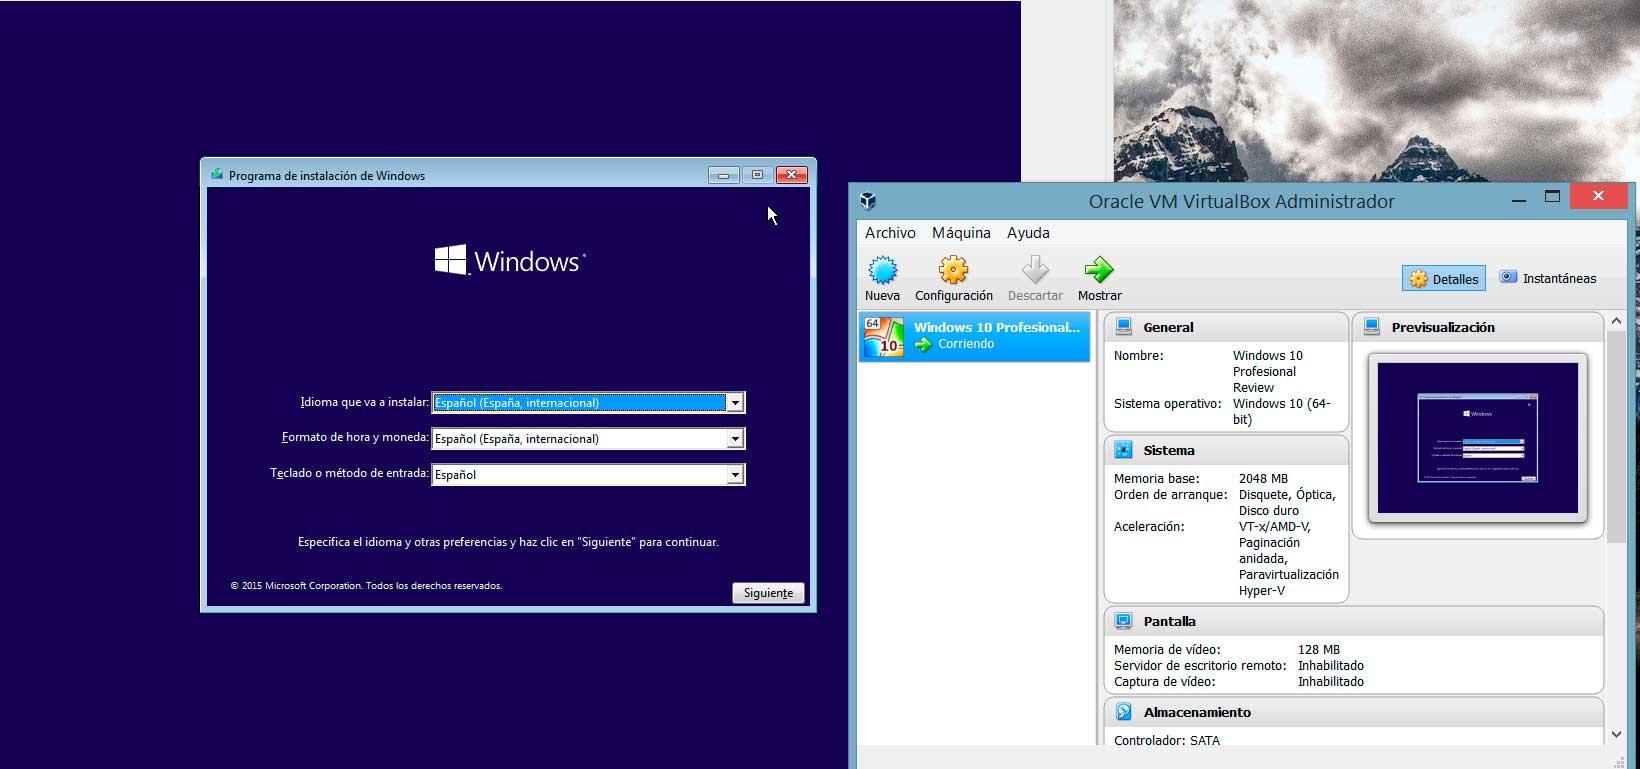 windows 10 iso file download for virtualbox